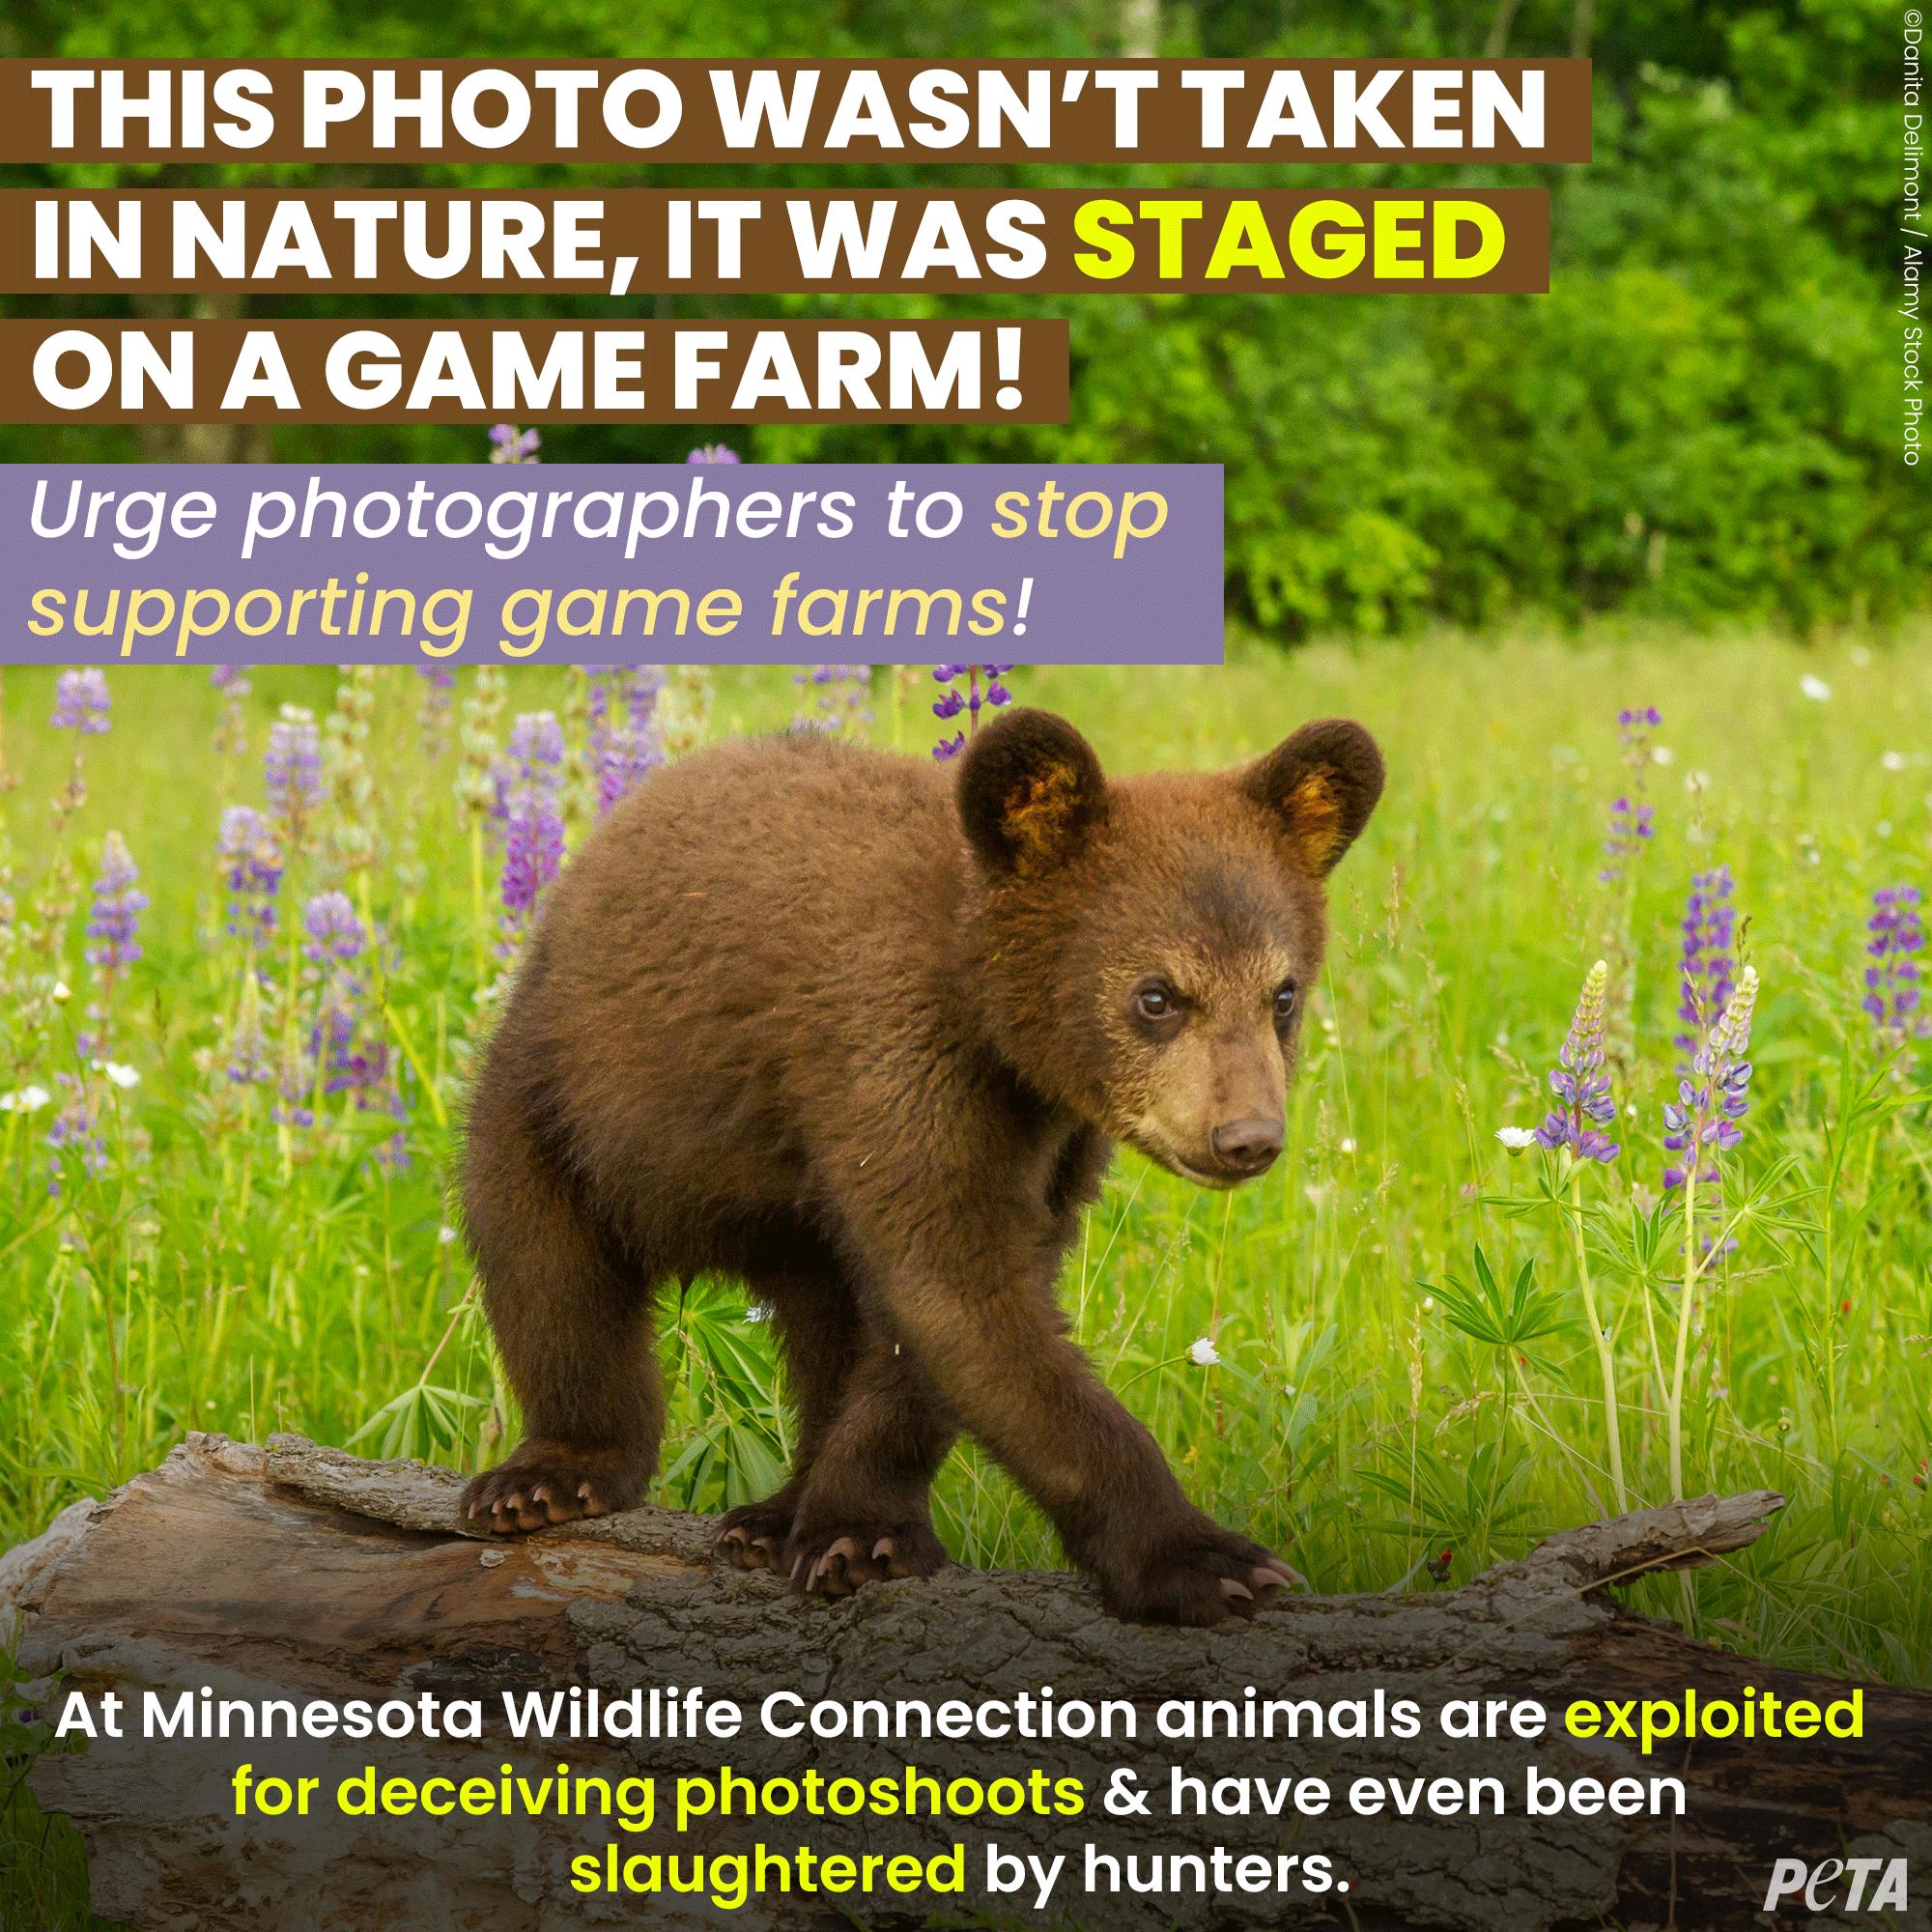 stock image of bear cub taken at wildlife farm